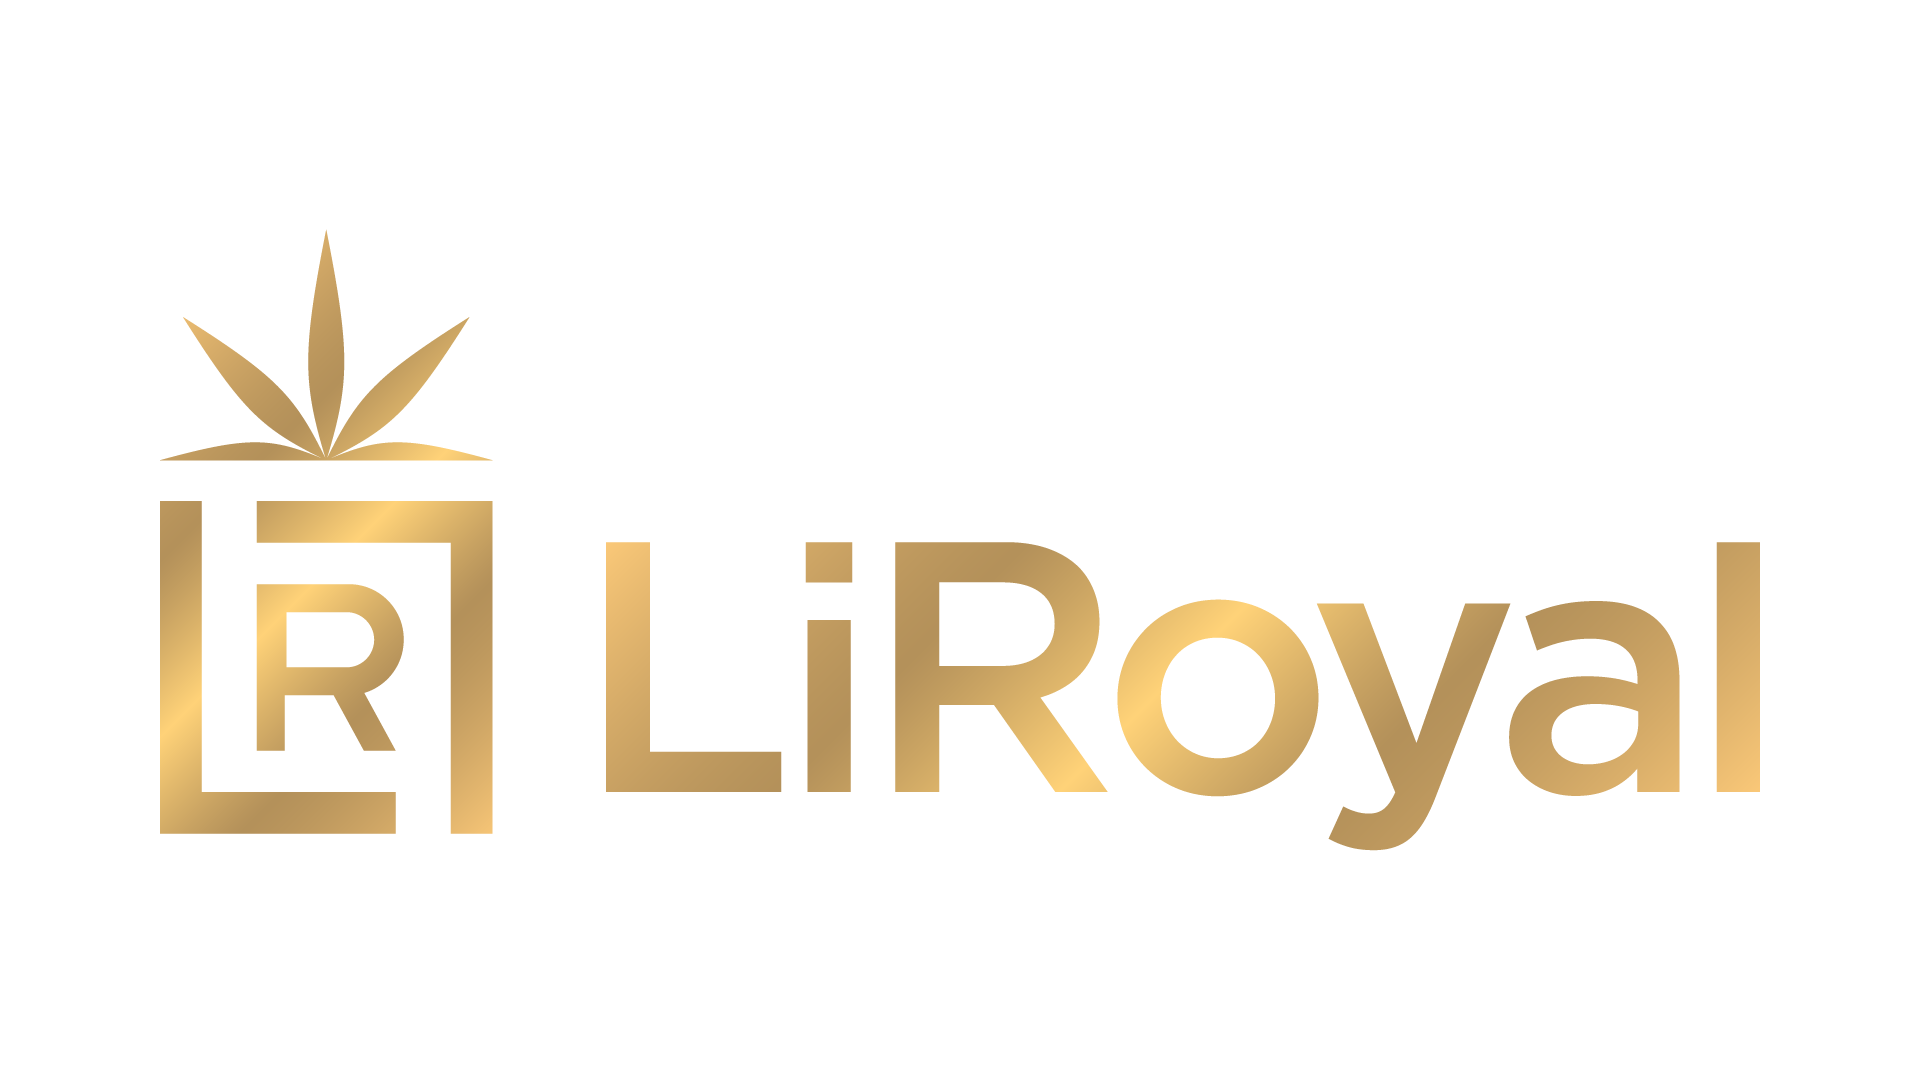 LiRoyal